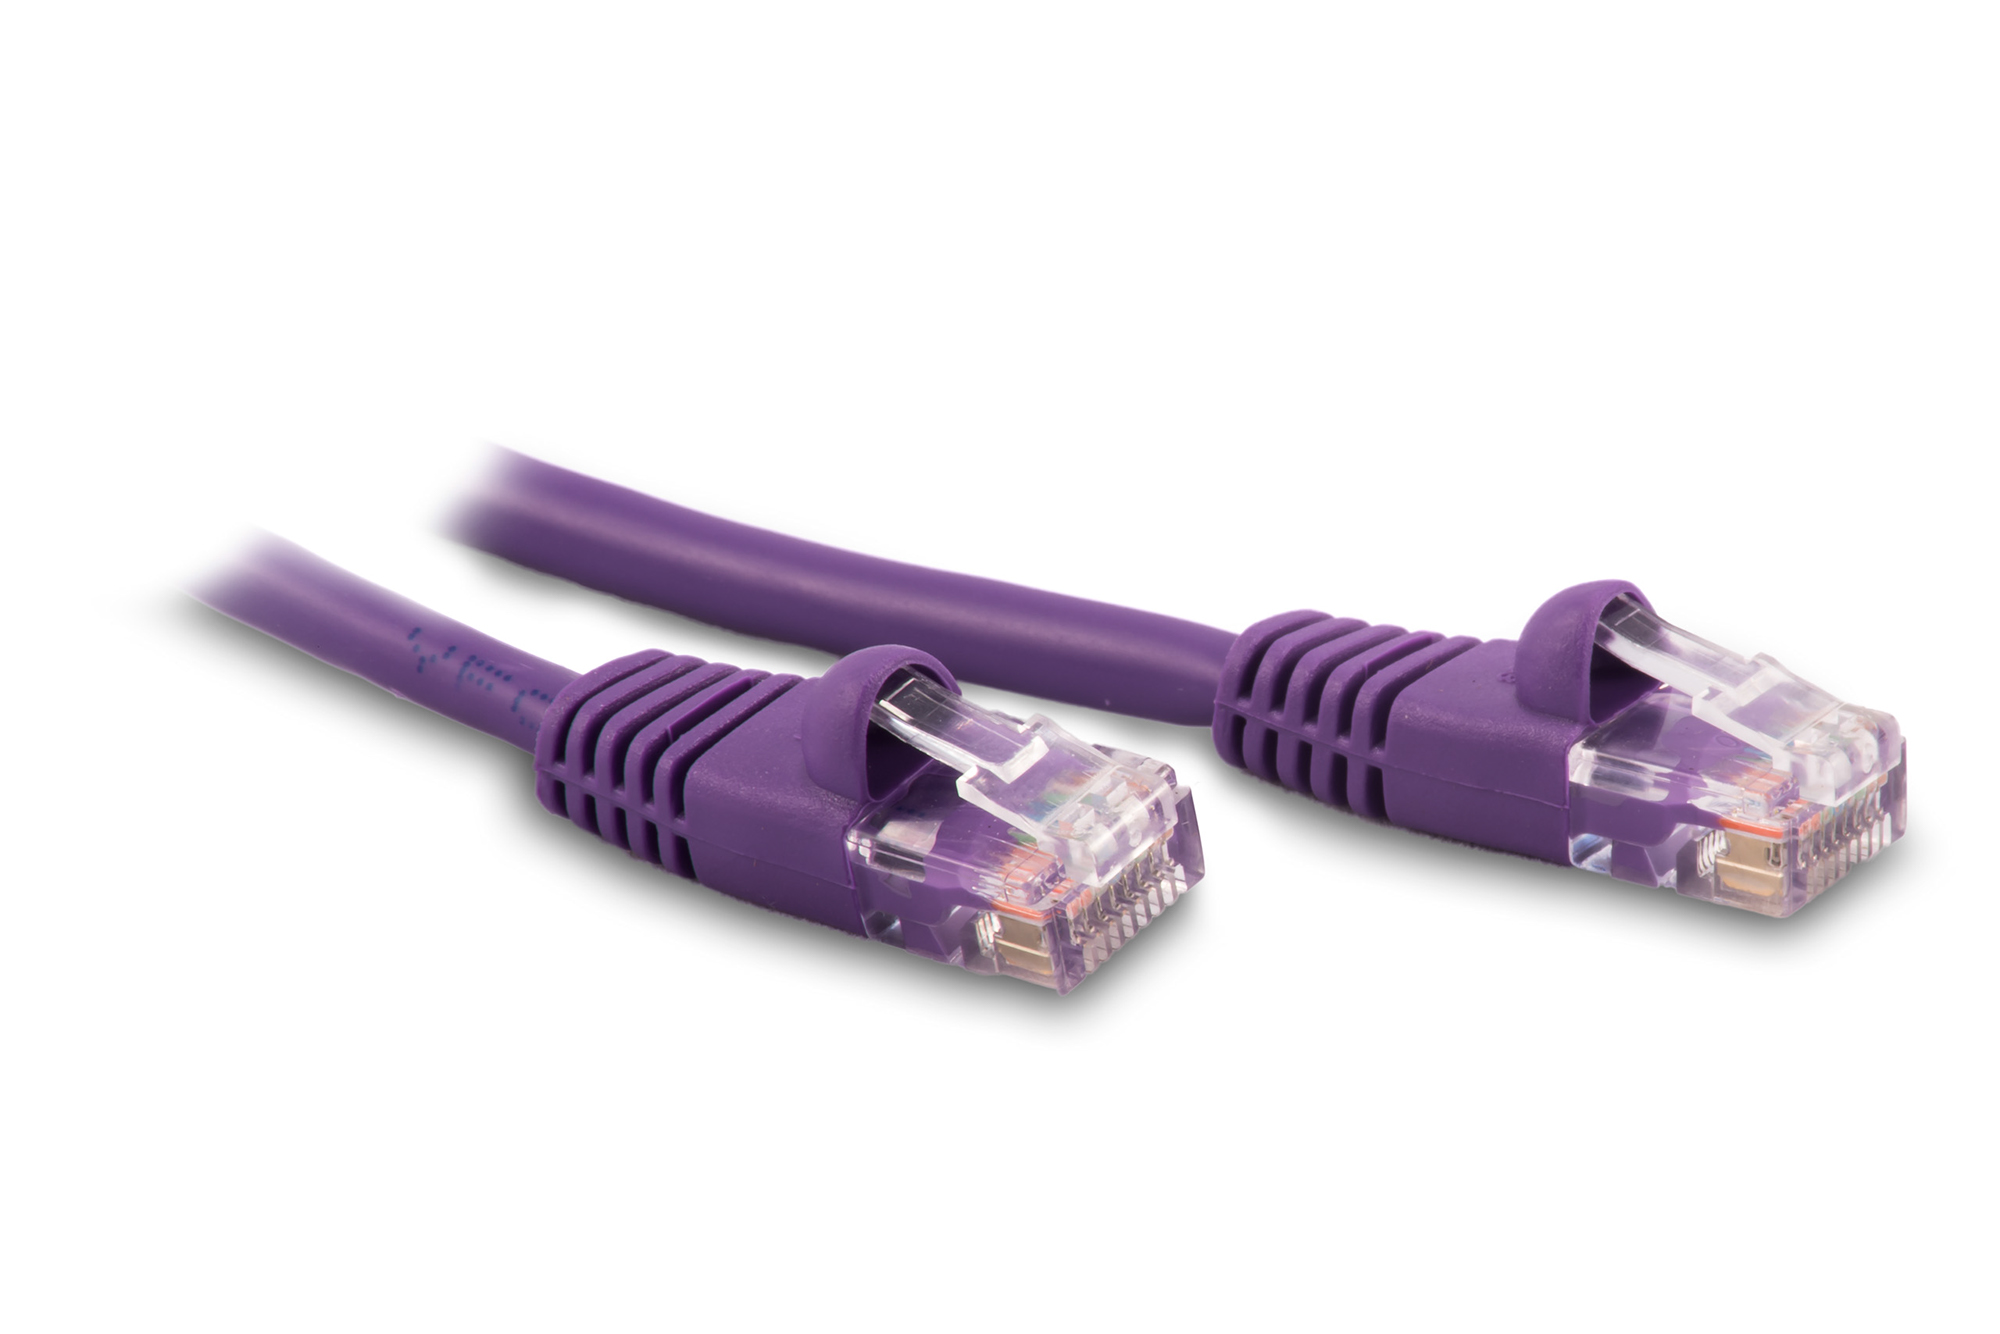 50ft Cat6 Ethernet Patch Cable - Violet Color - Snagless Boot, Stranded, RJ45, 550Mhz, 24AWG